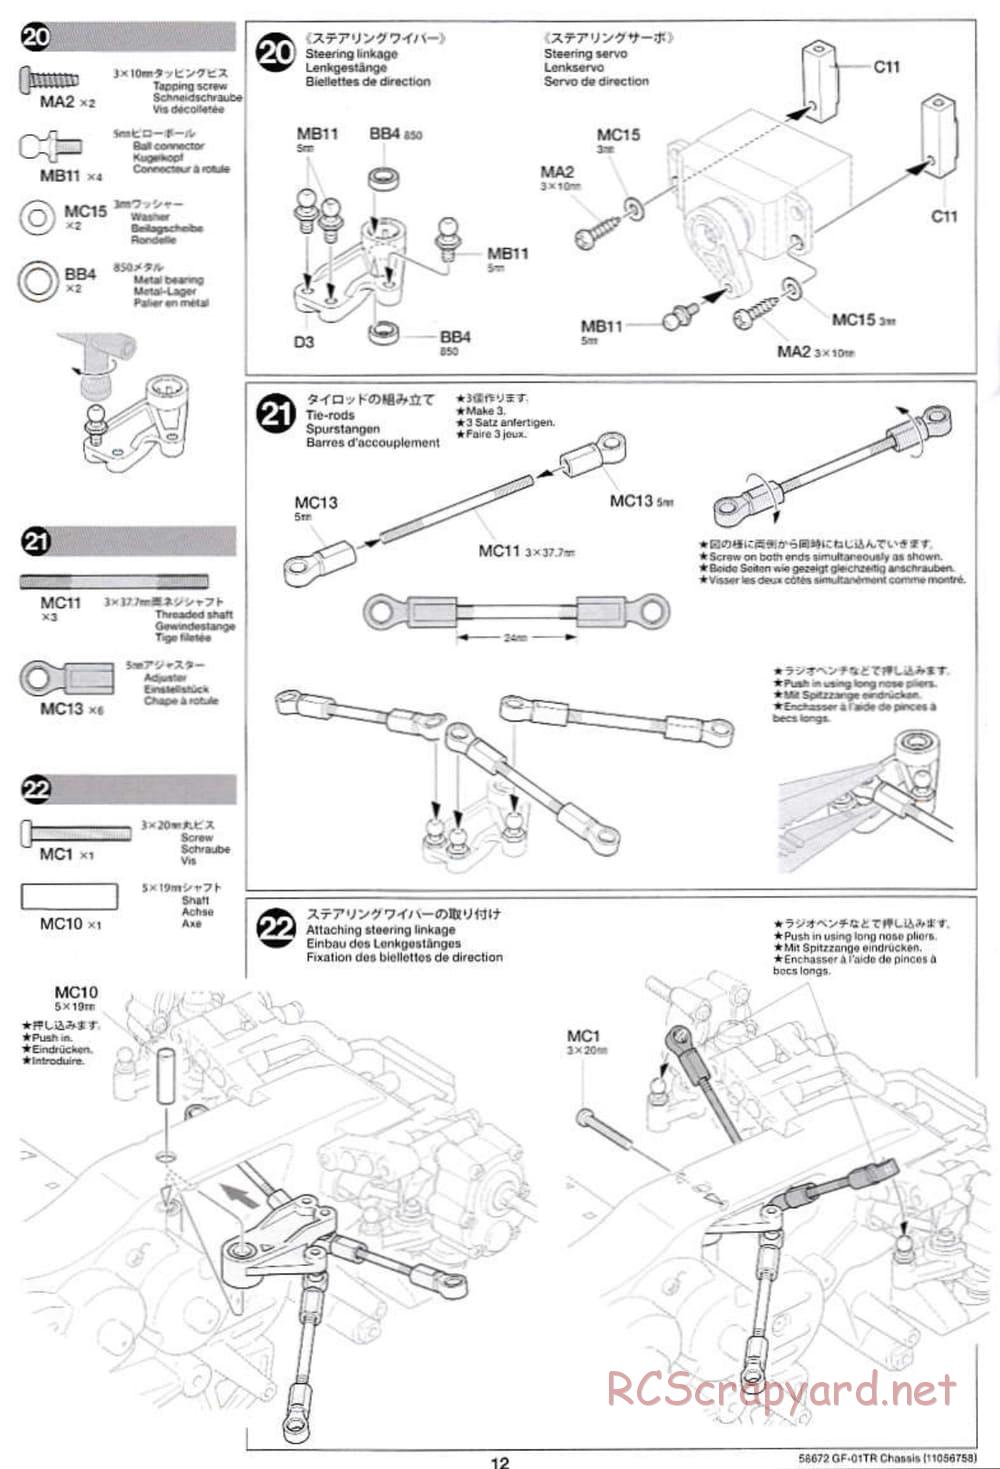 Tamiya - Monster Beetle Trail - GF-01TR Chassis - Manual - Page 12